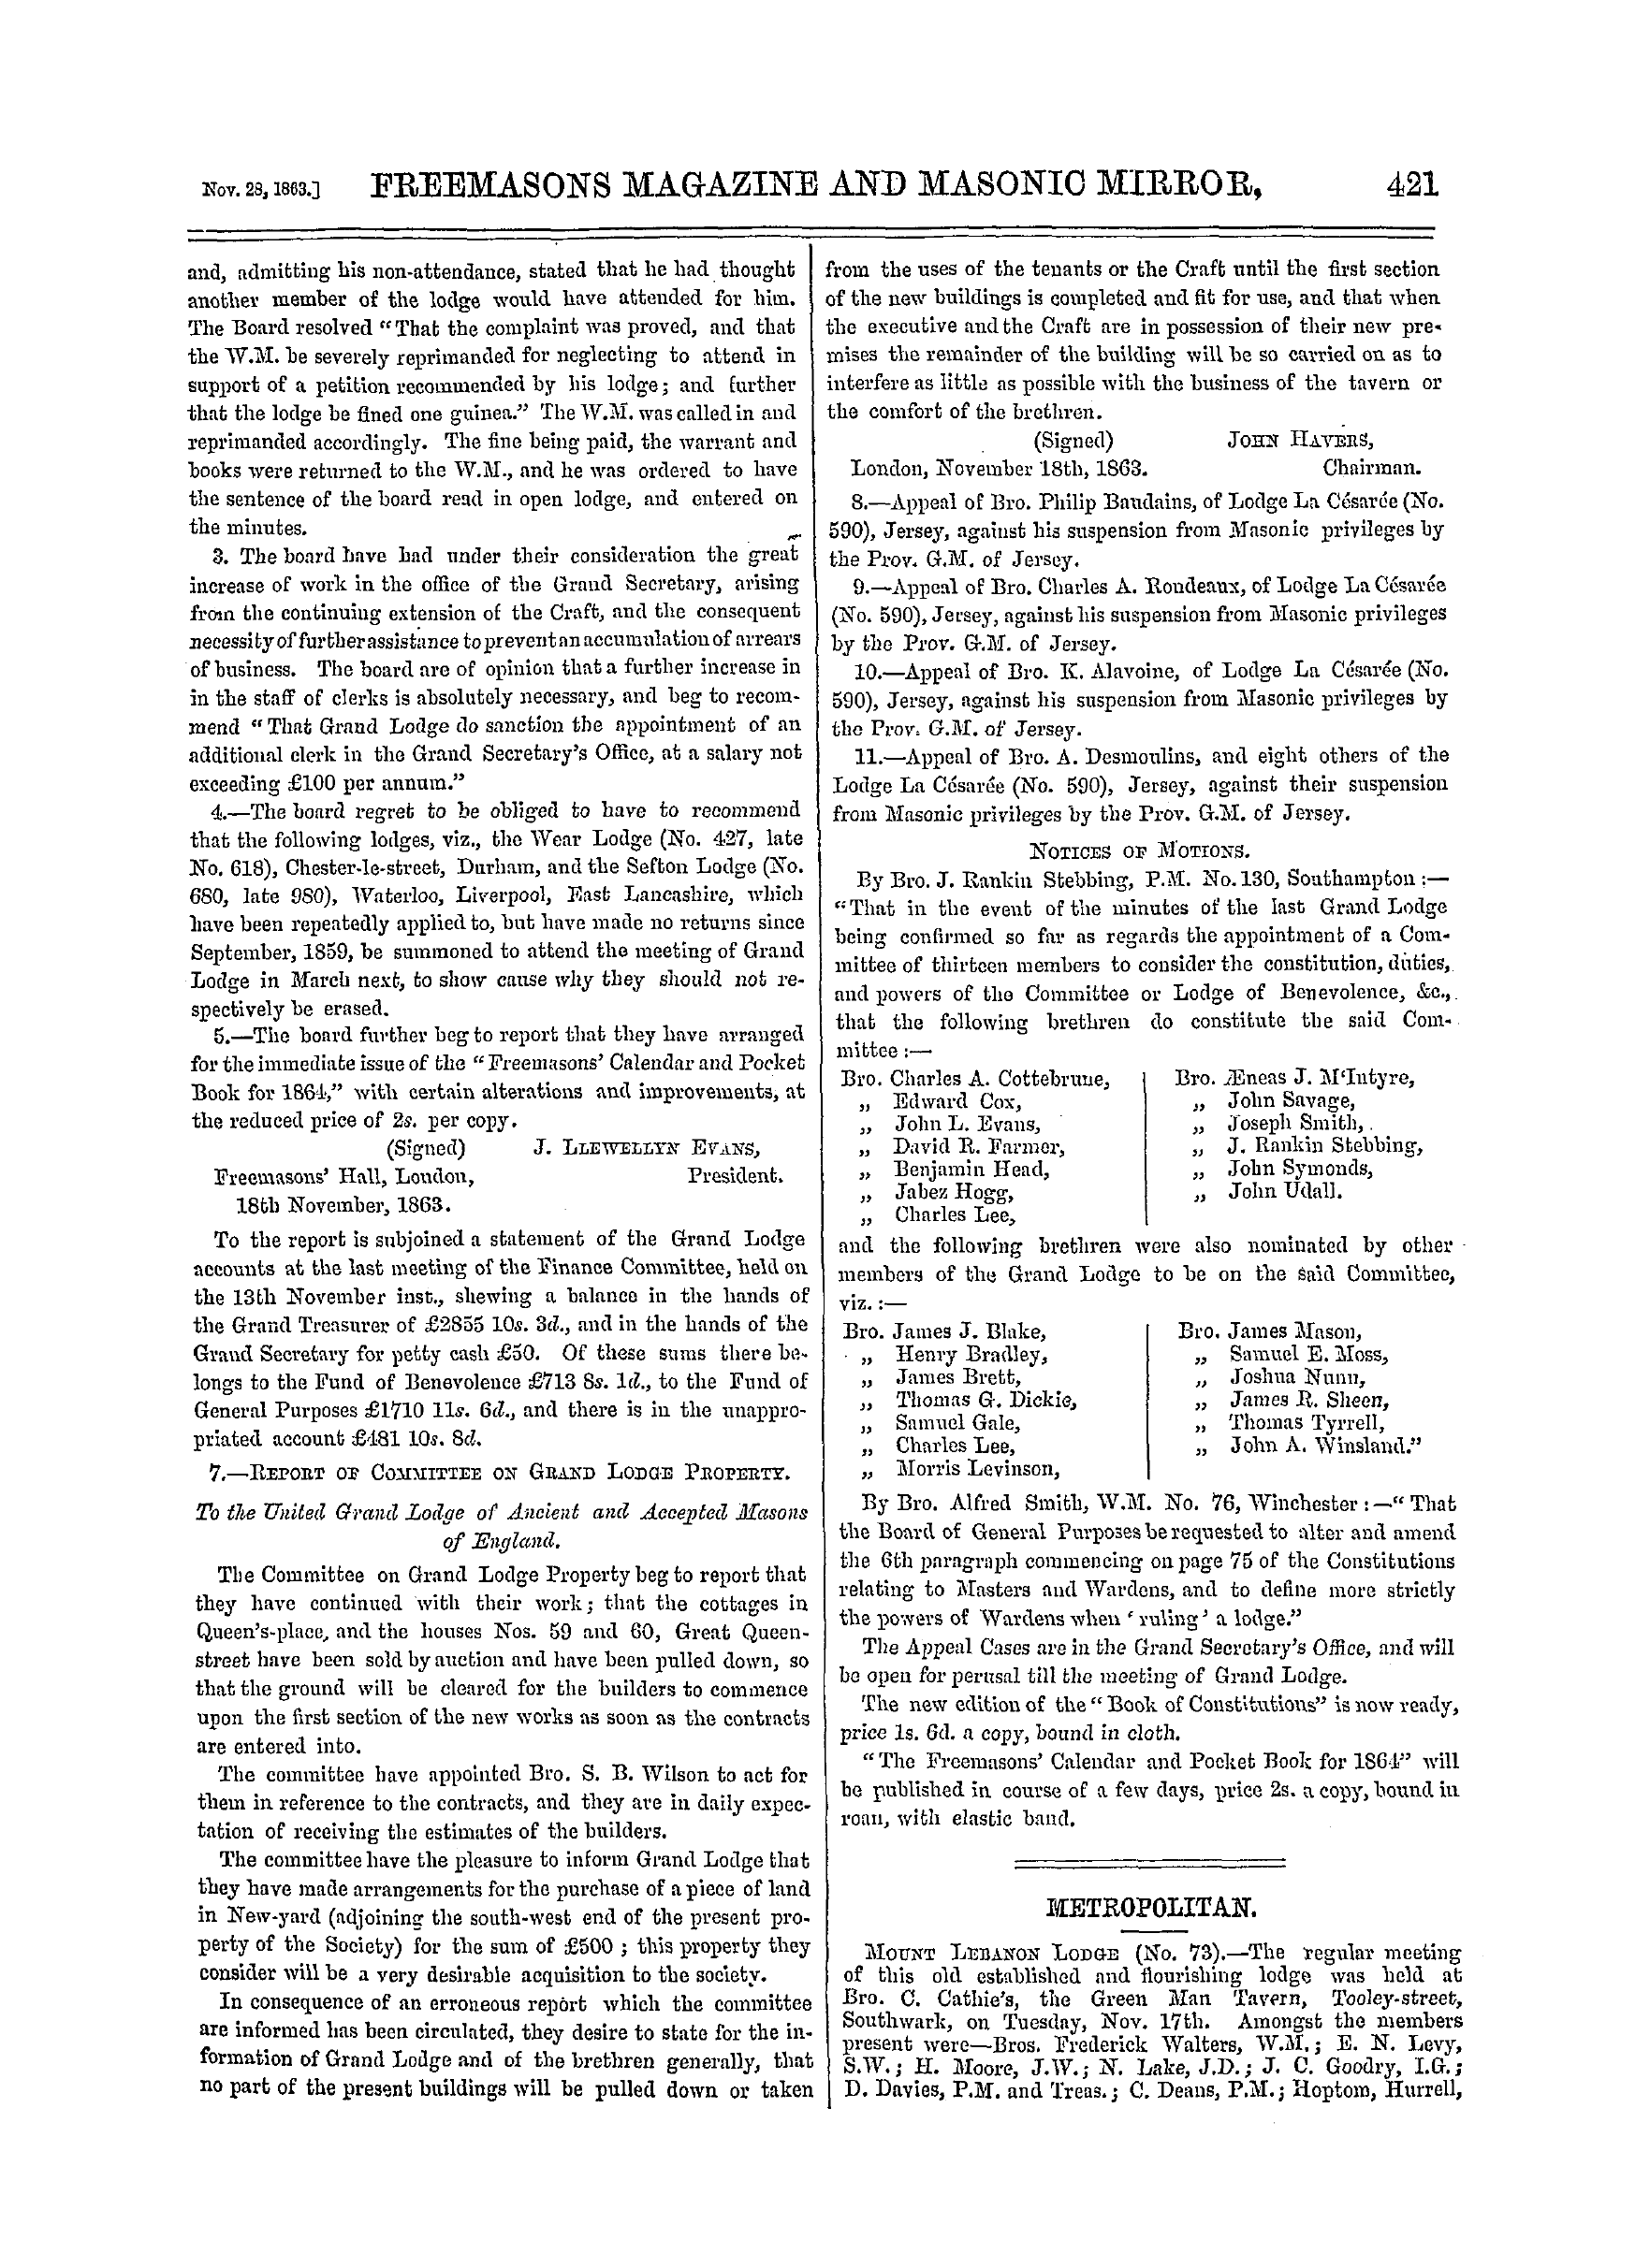 The Freemasons' Monthly Magazine: 1863-11-28 - Metropolitan.